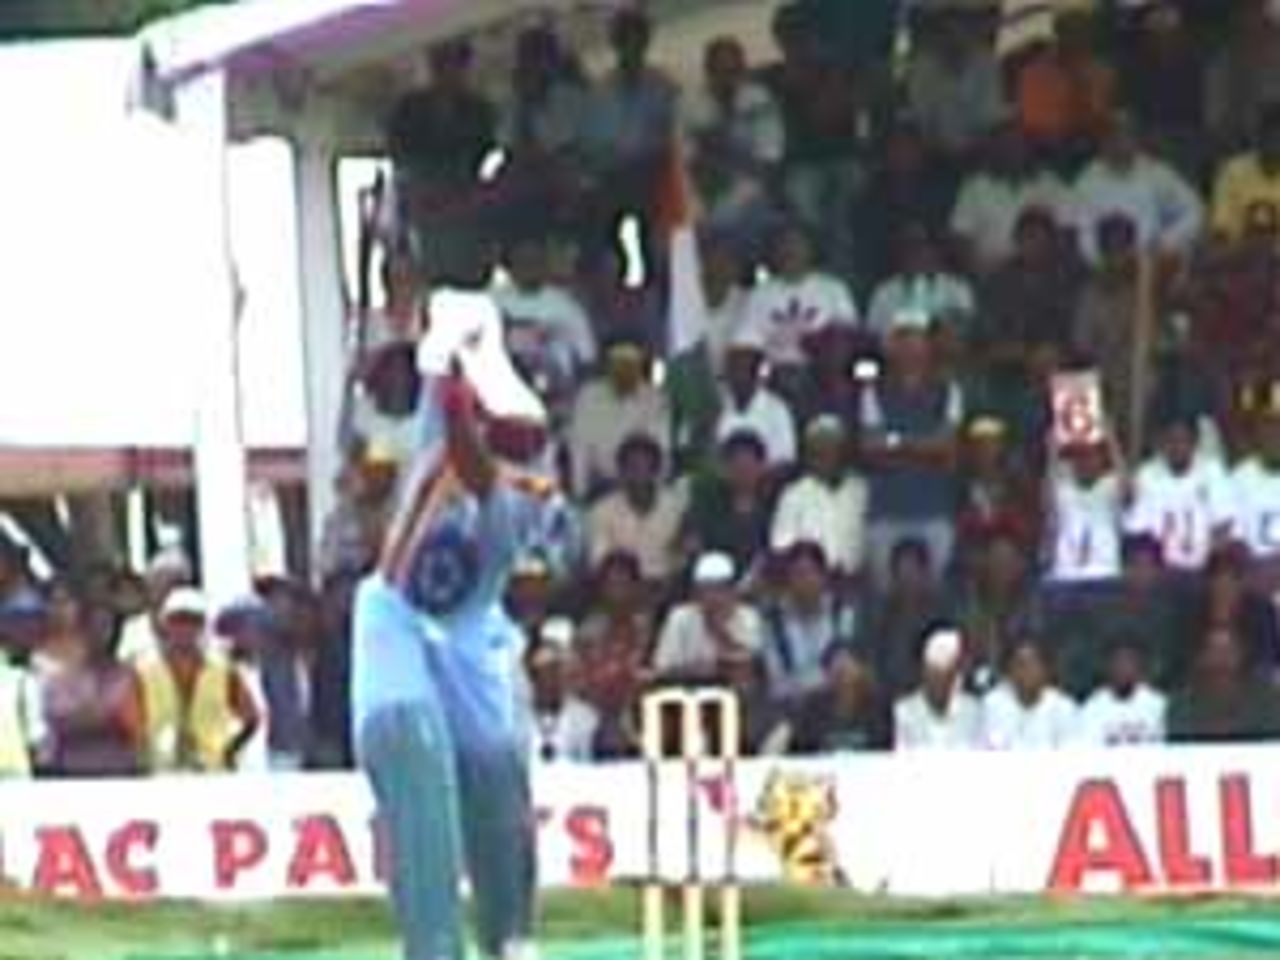 Kambli drives through the off-side, India v West Indies (3rd ODI), Coca-Cola Singapore Challenge, 1999-2000, Kallang Ground, Singapore, 5 Sep 1999.